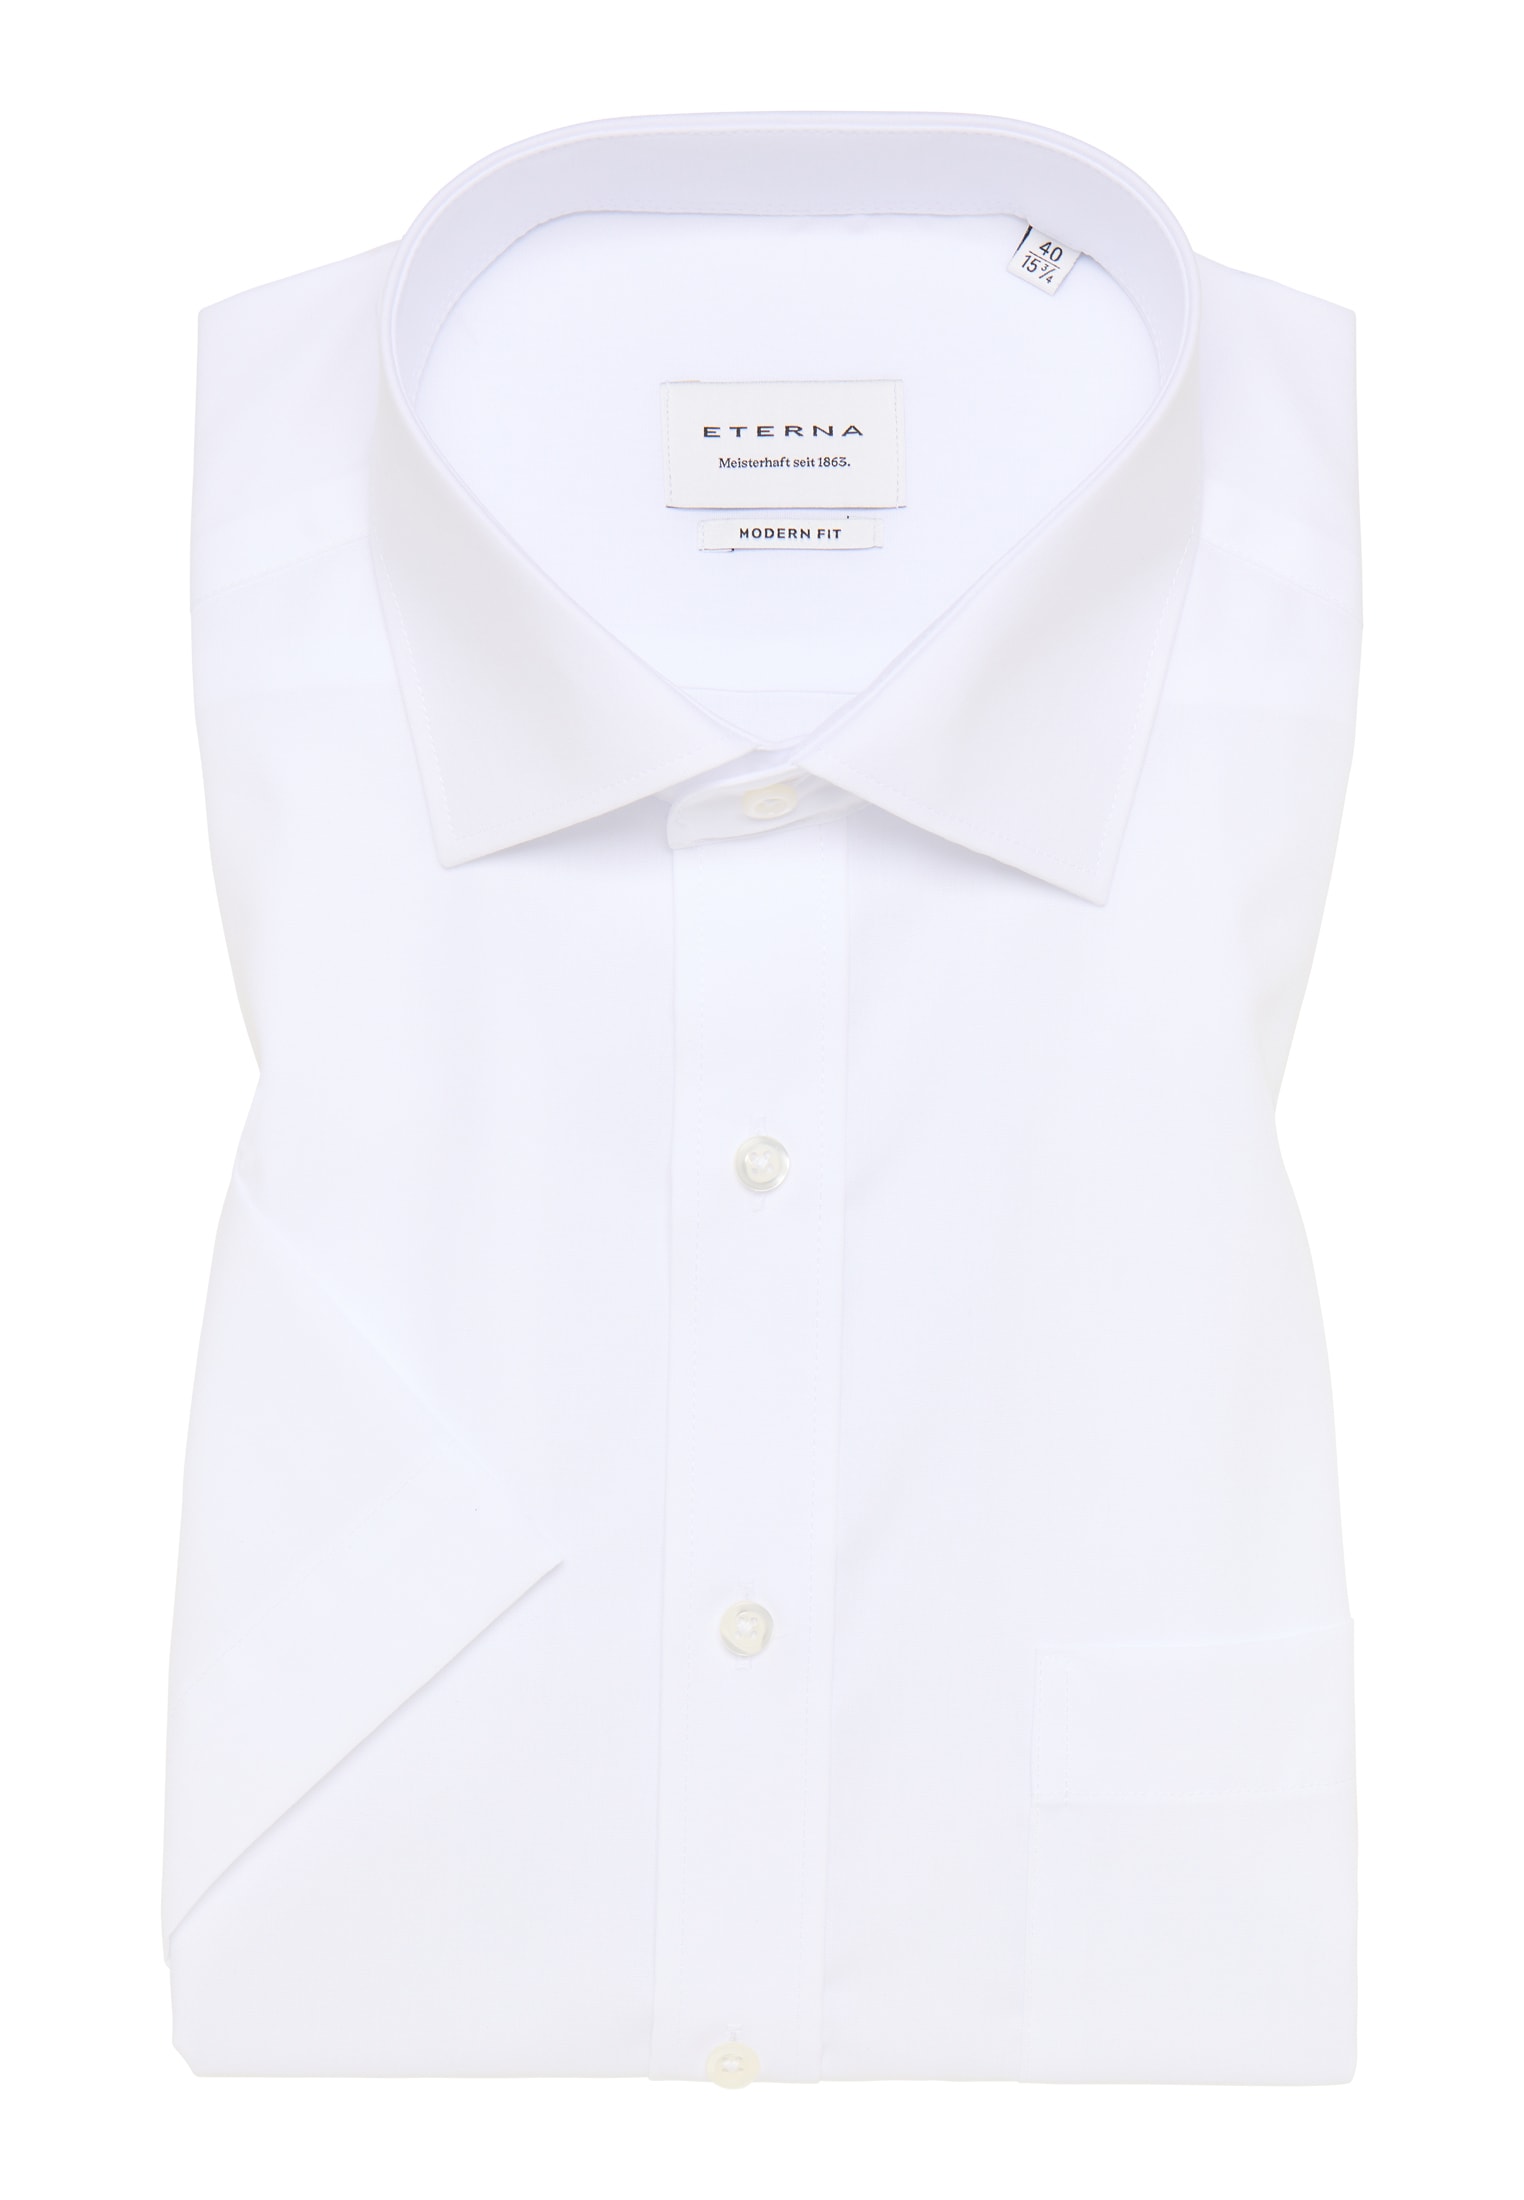 MODERN FIT Original Shirt in weiß unifarben | weiß | 37 | Kurzarm |  1SH00092-00-01-37-1/2